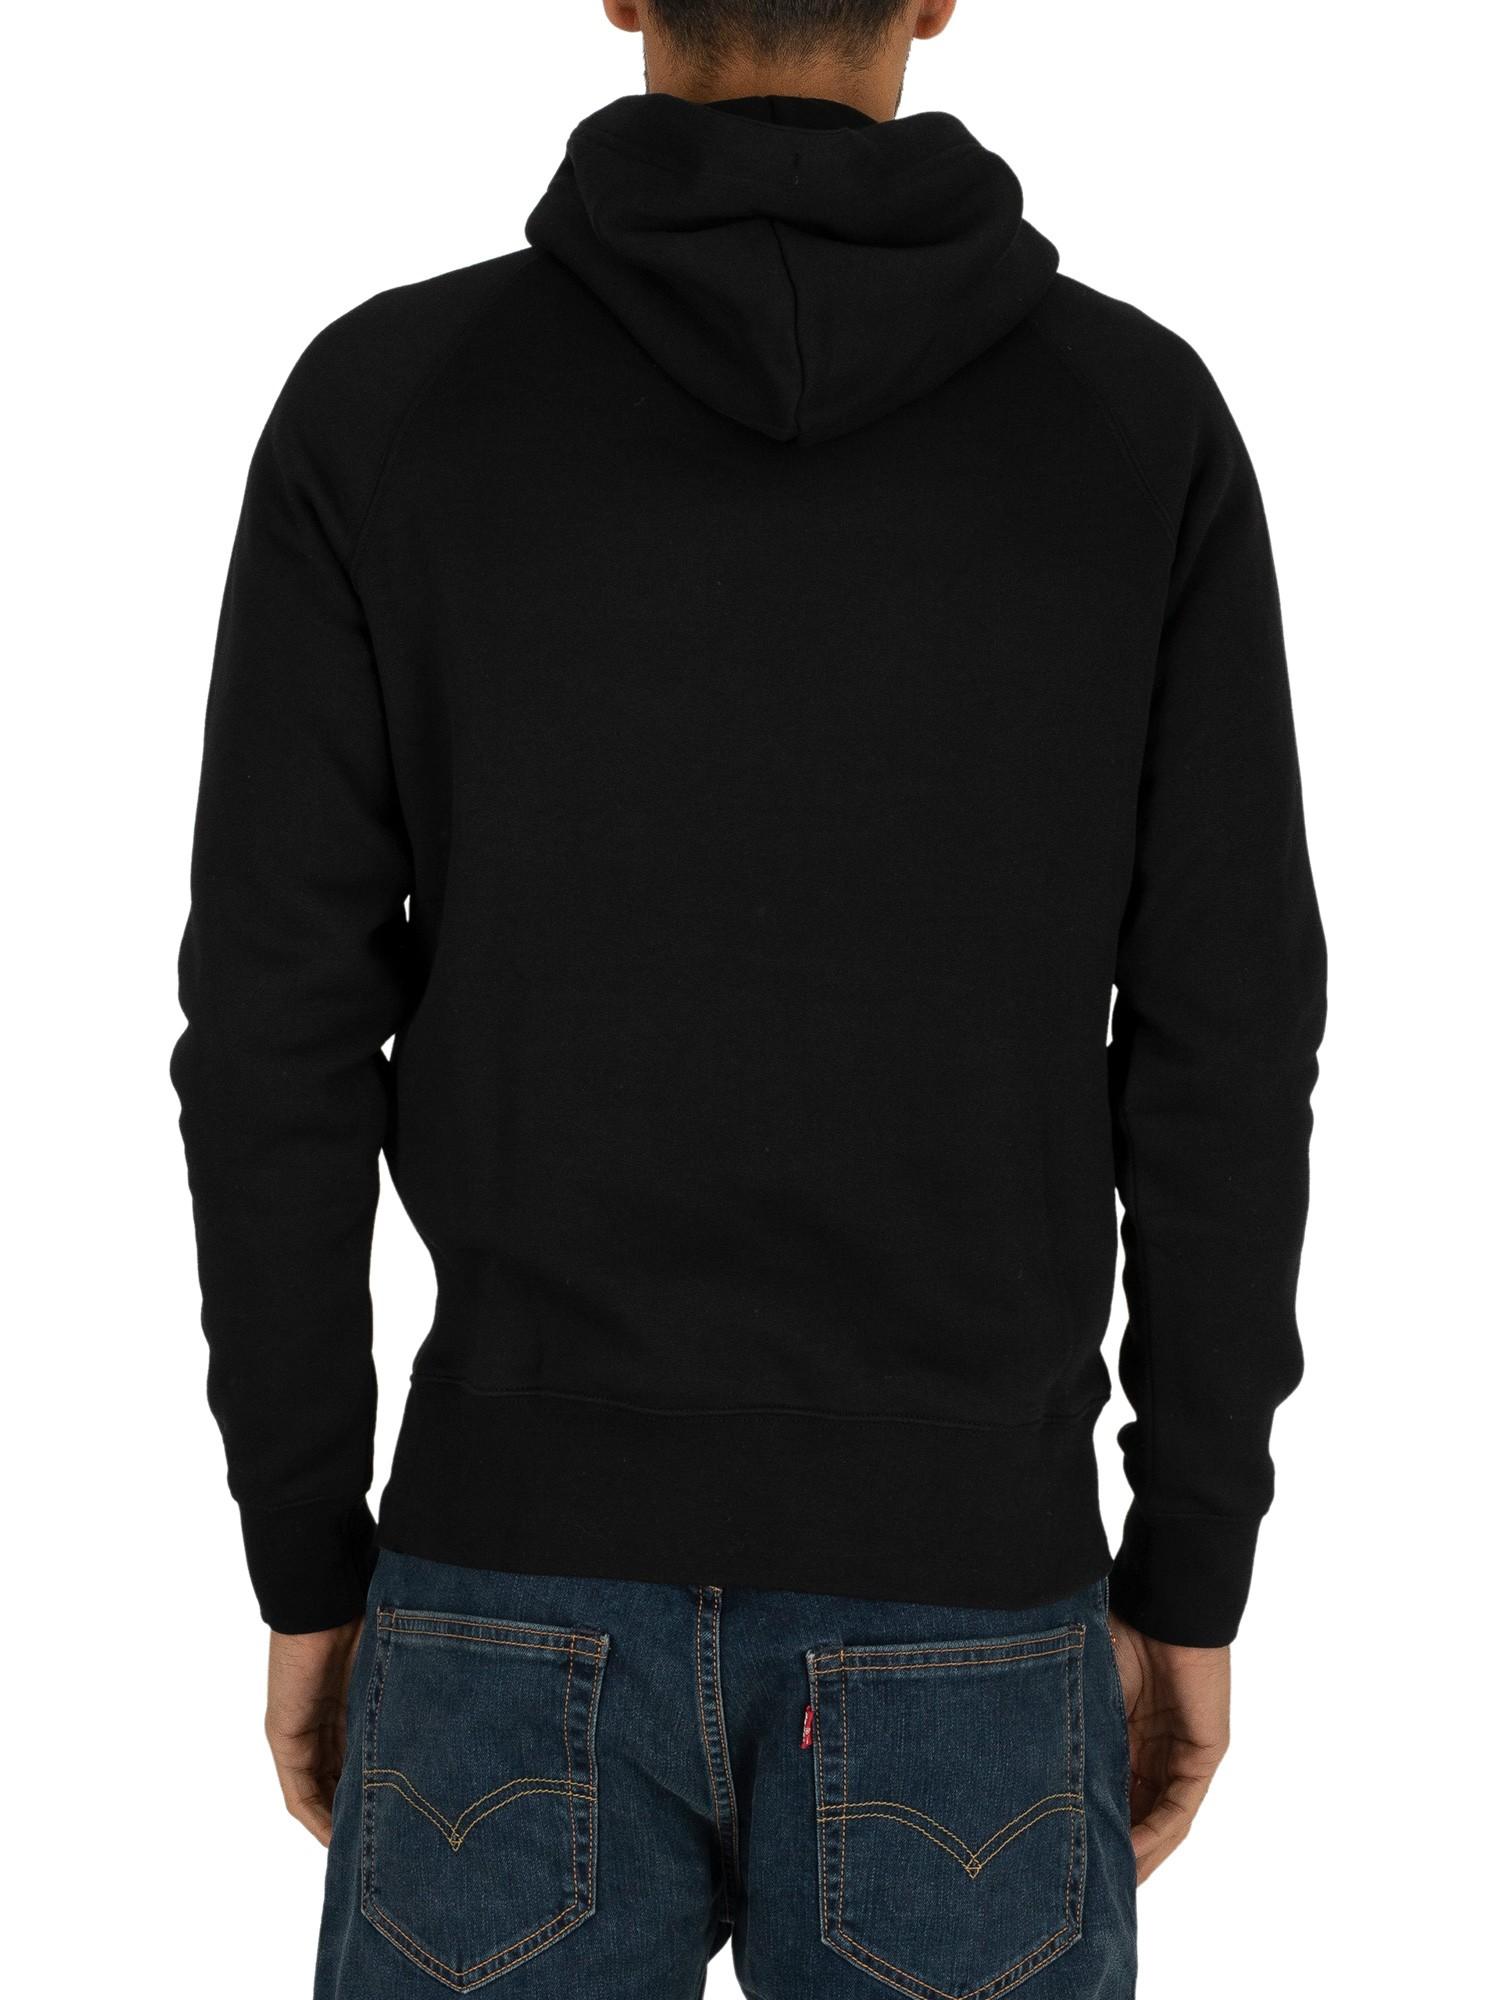 GANT Cotton Shield Pullover Hoodie in Black for Men - Lyst